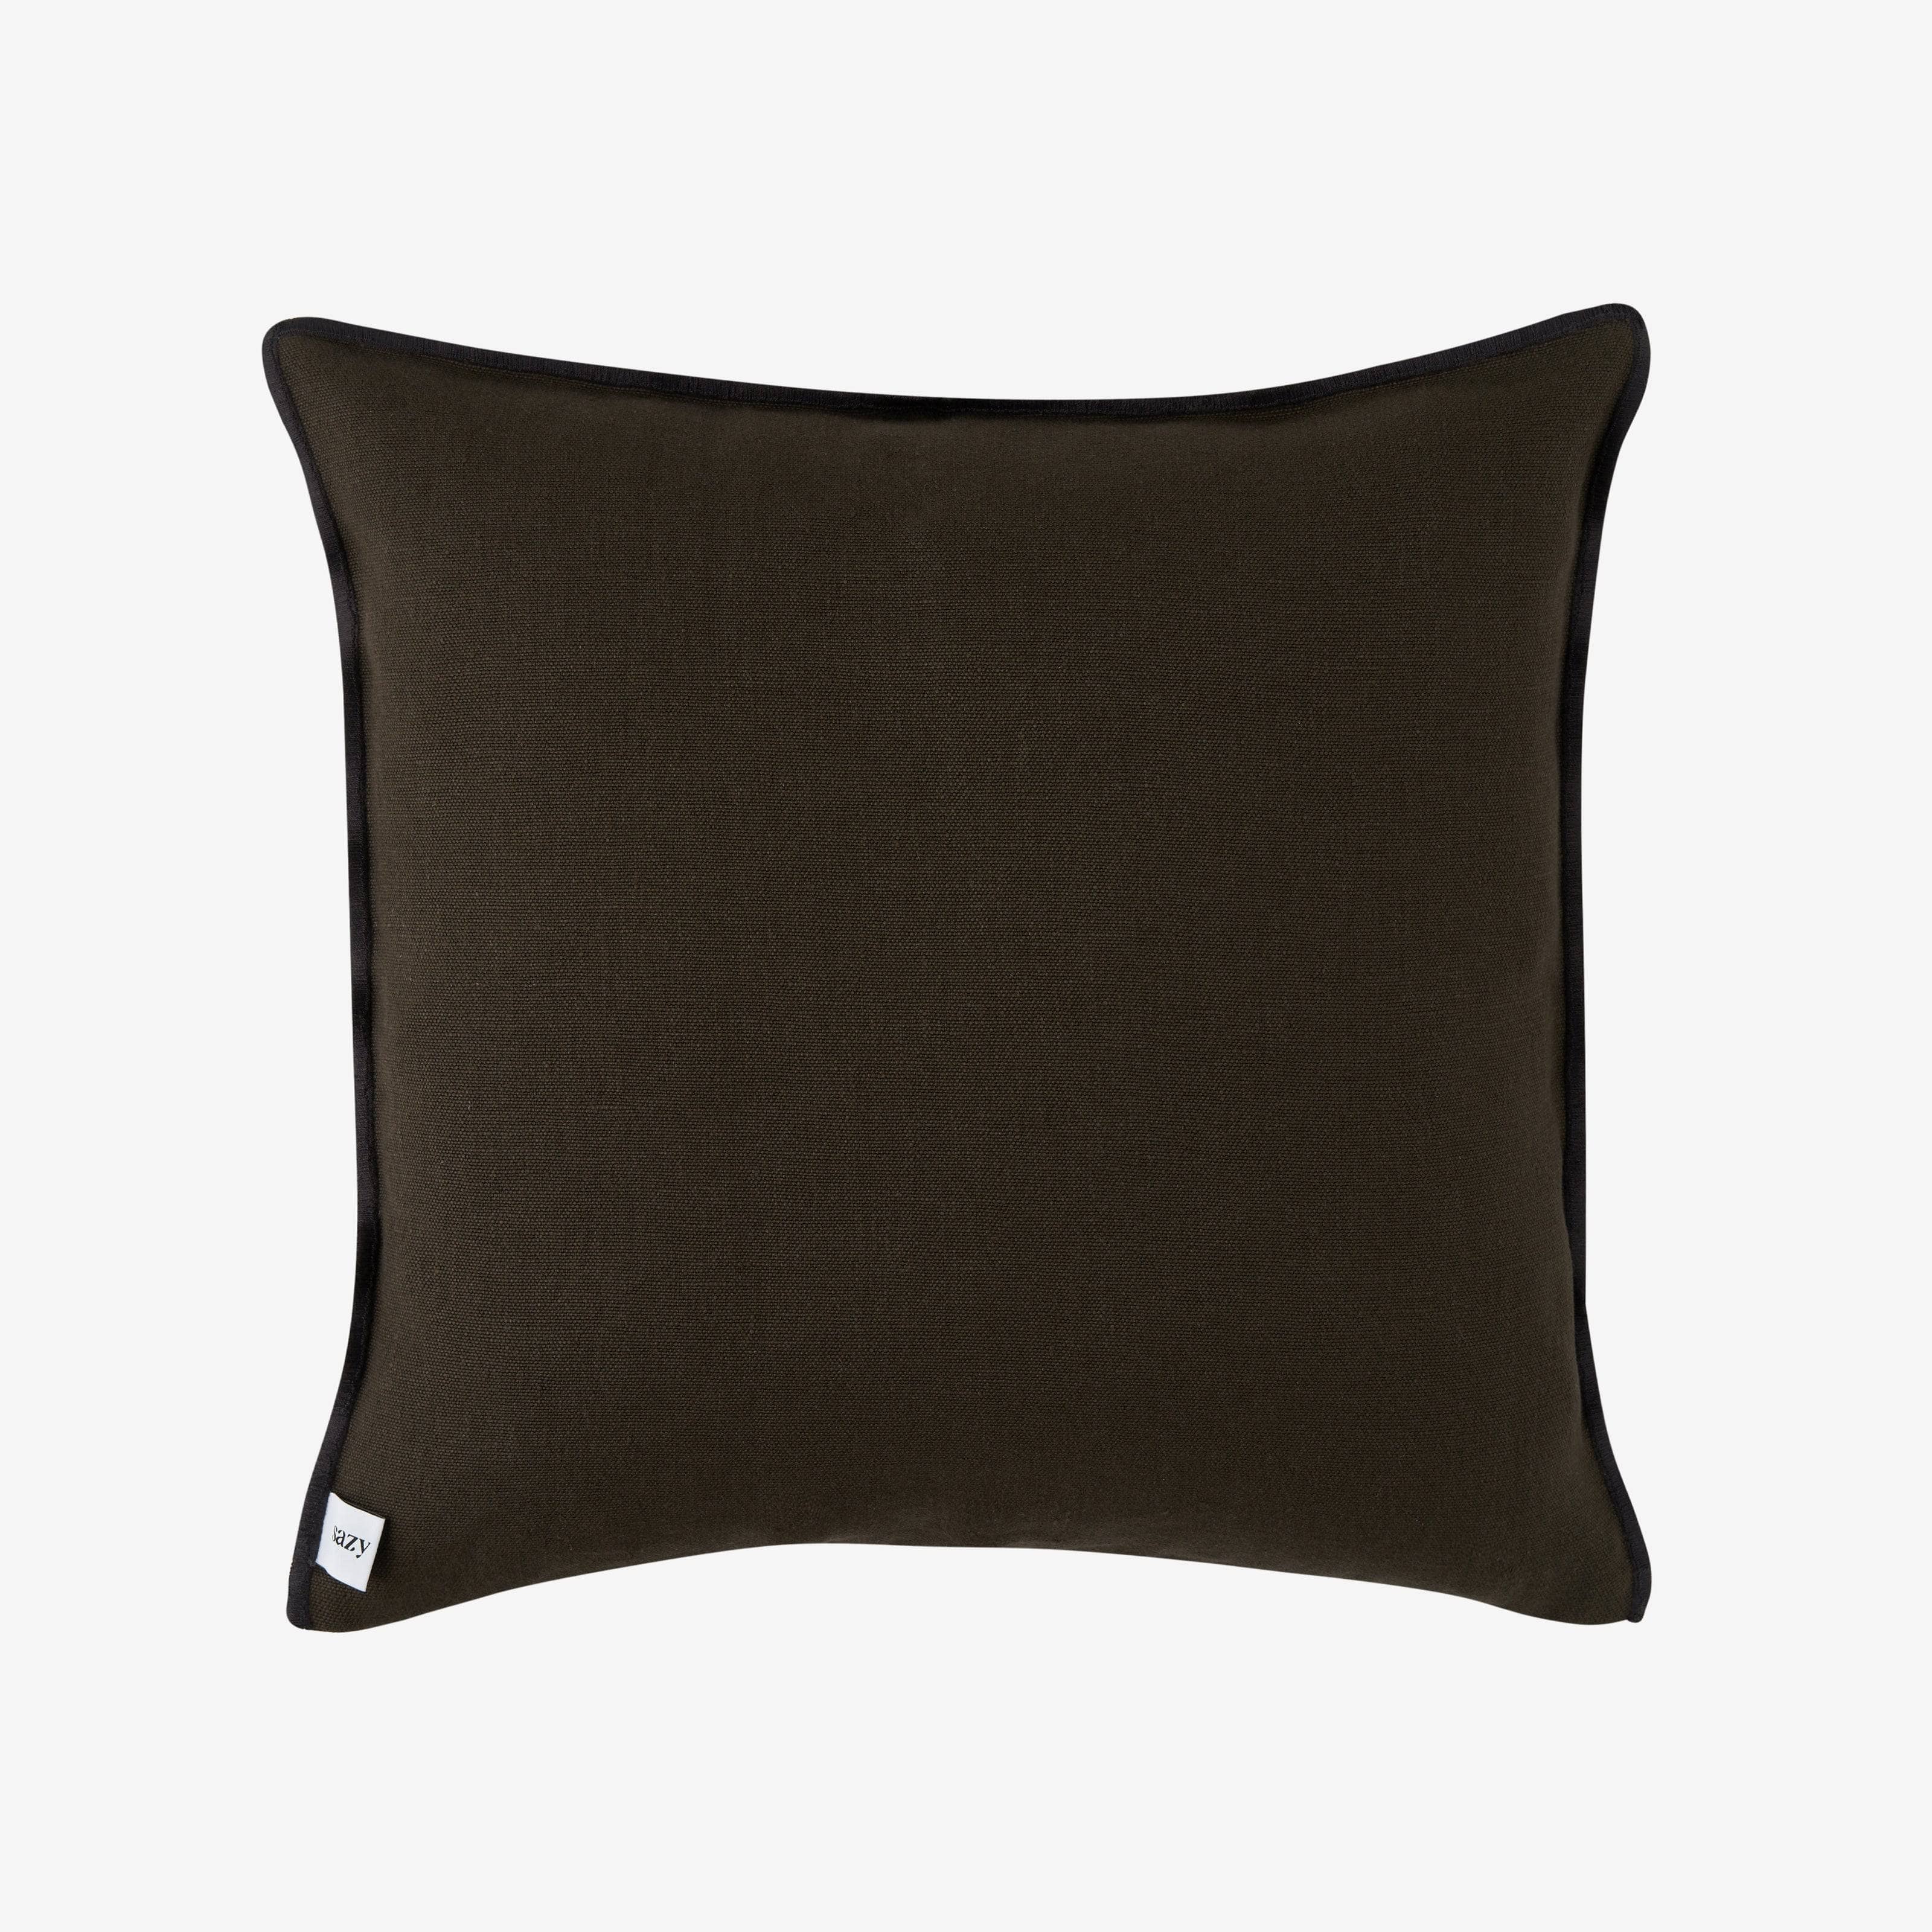 Lido Striped Linen Cushion Cover, Natural - Black, 45x45 cm - 2